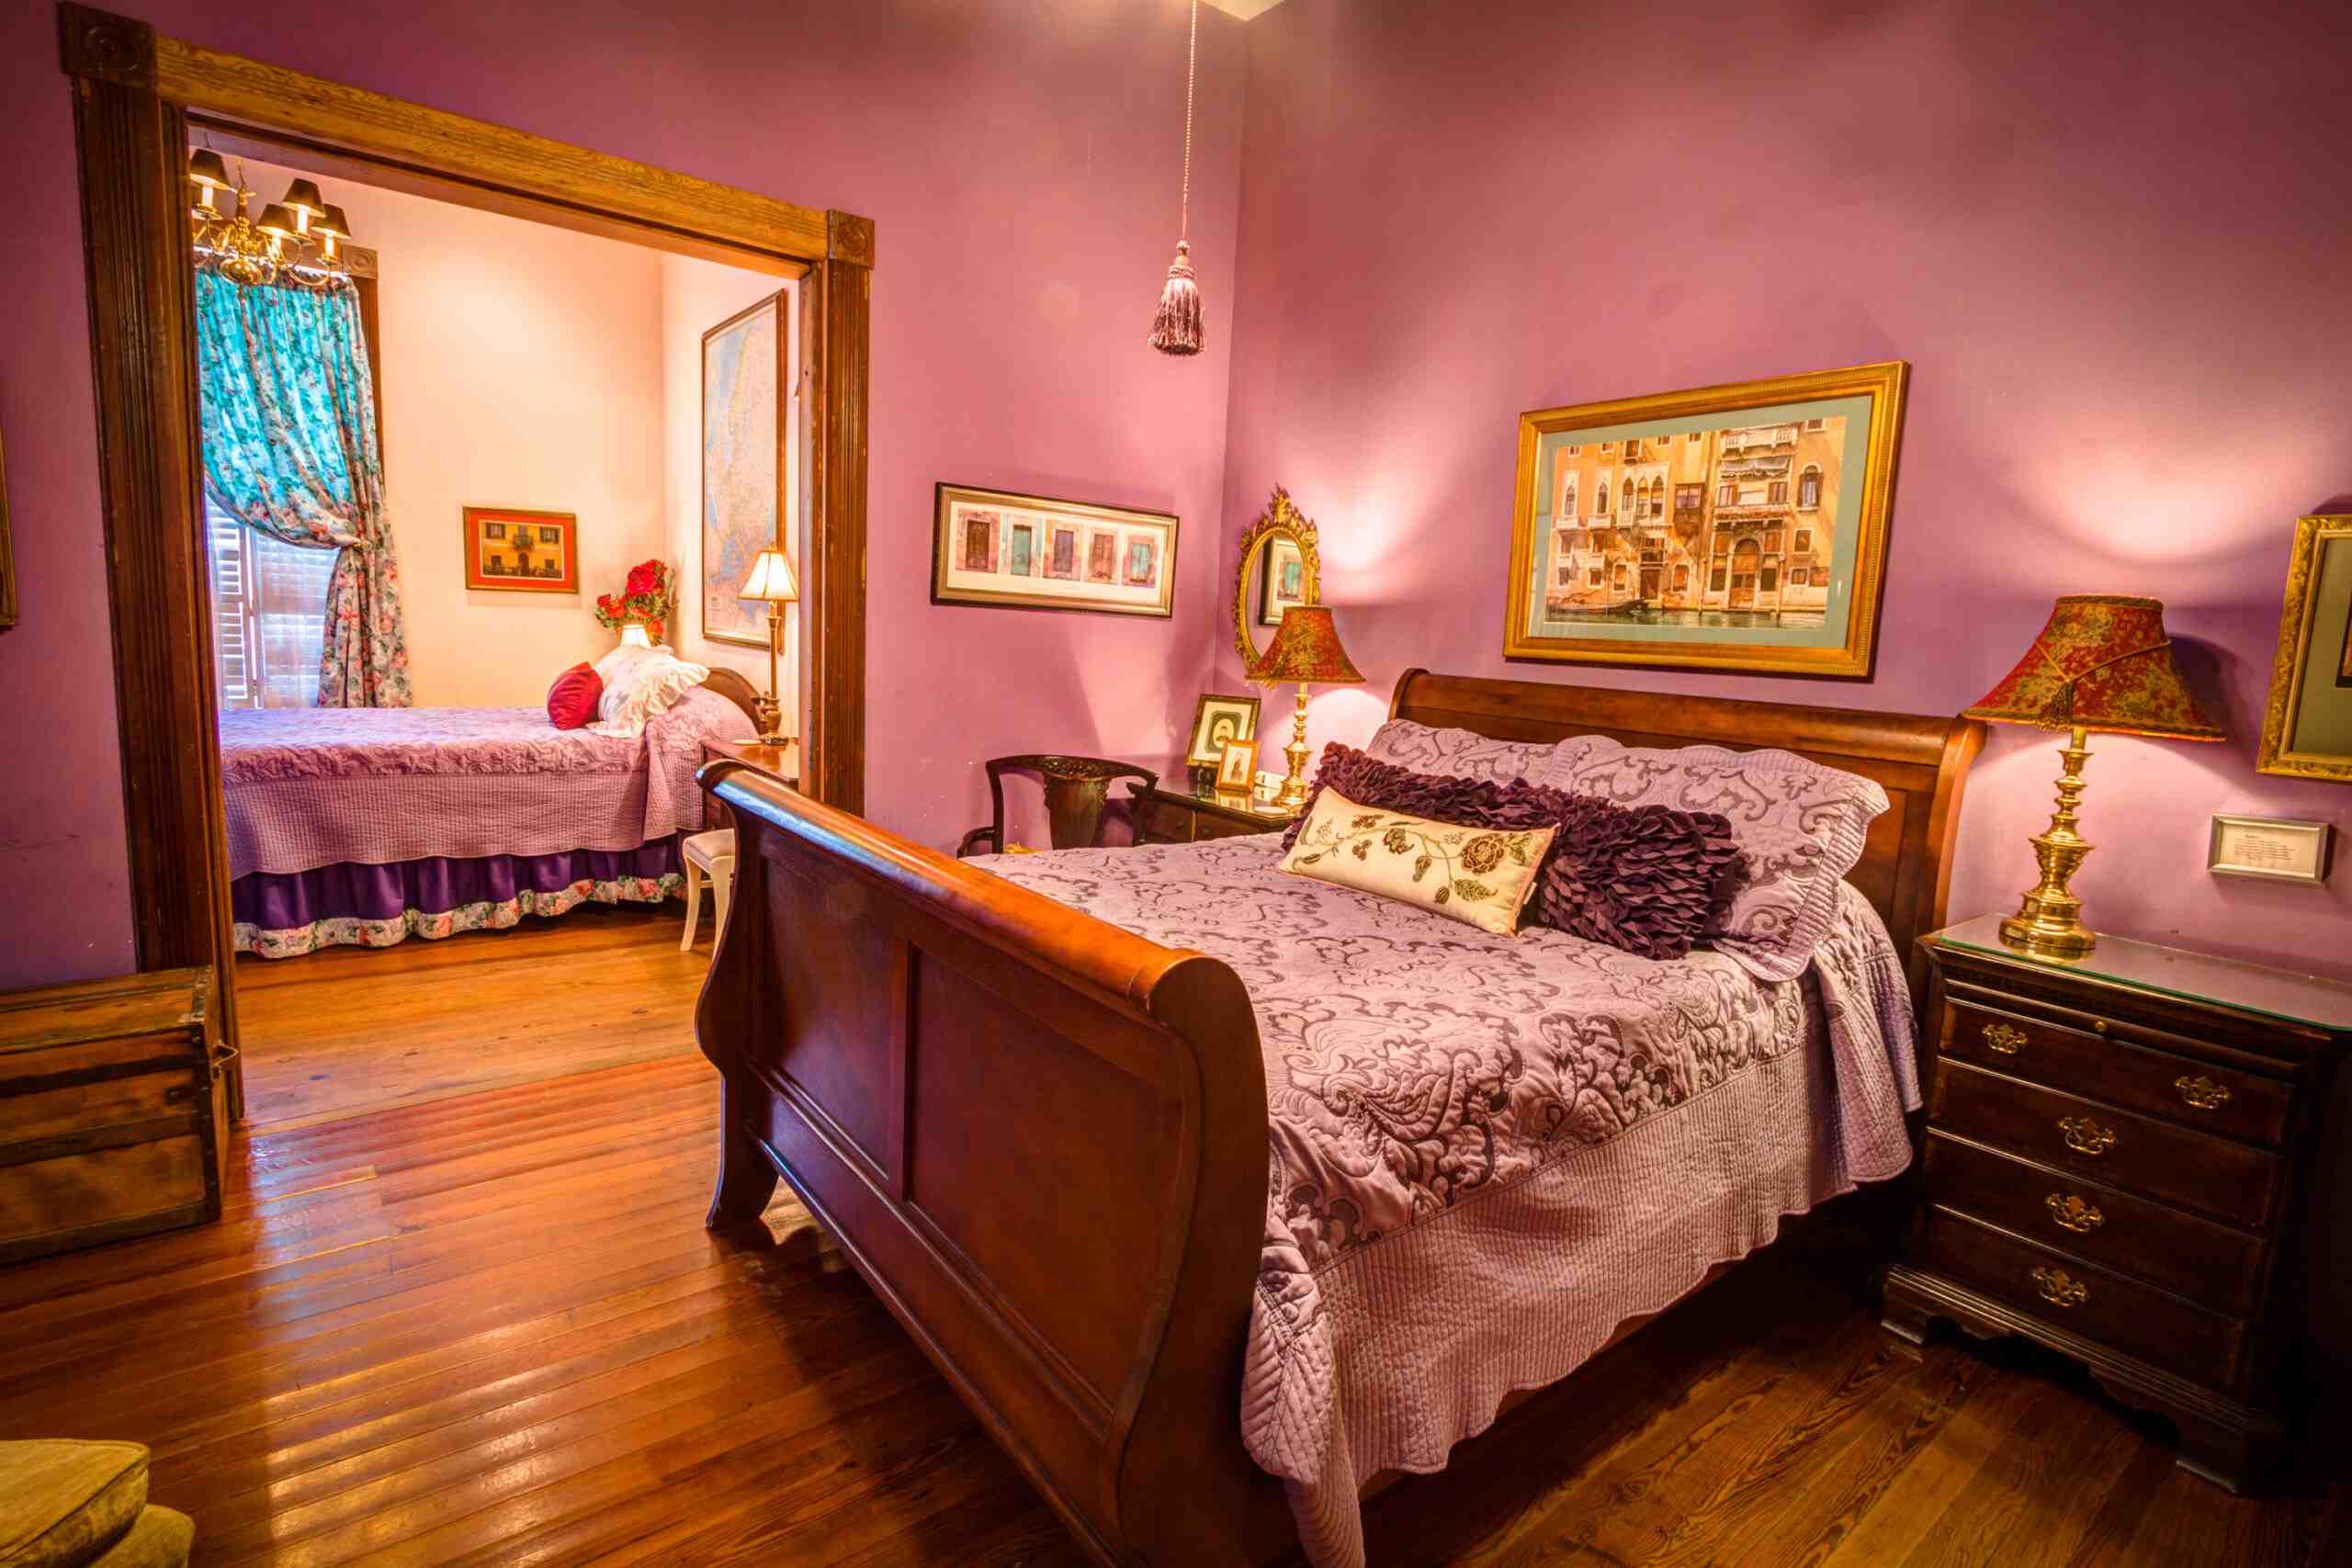 A purple bedroom